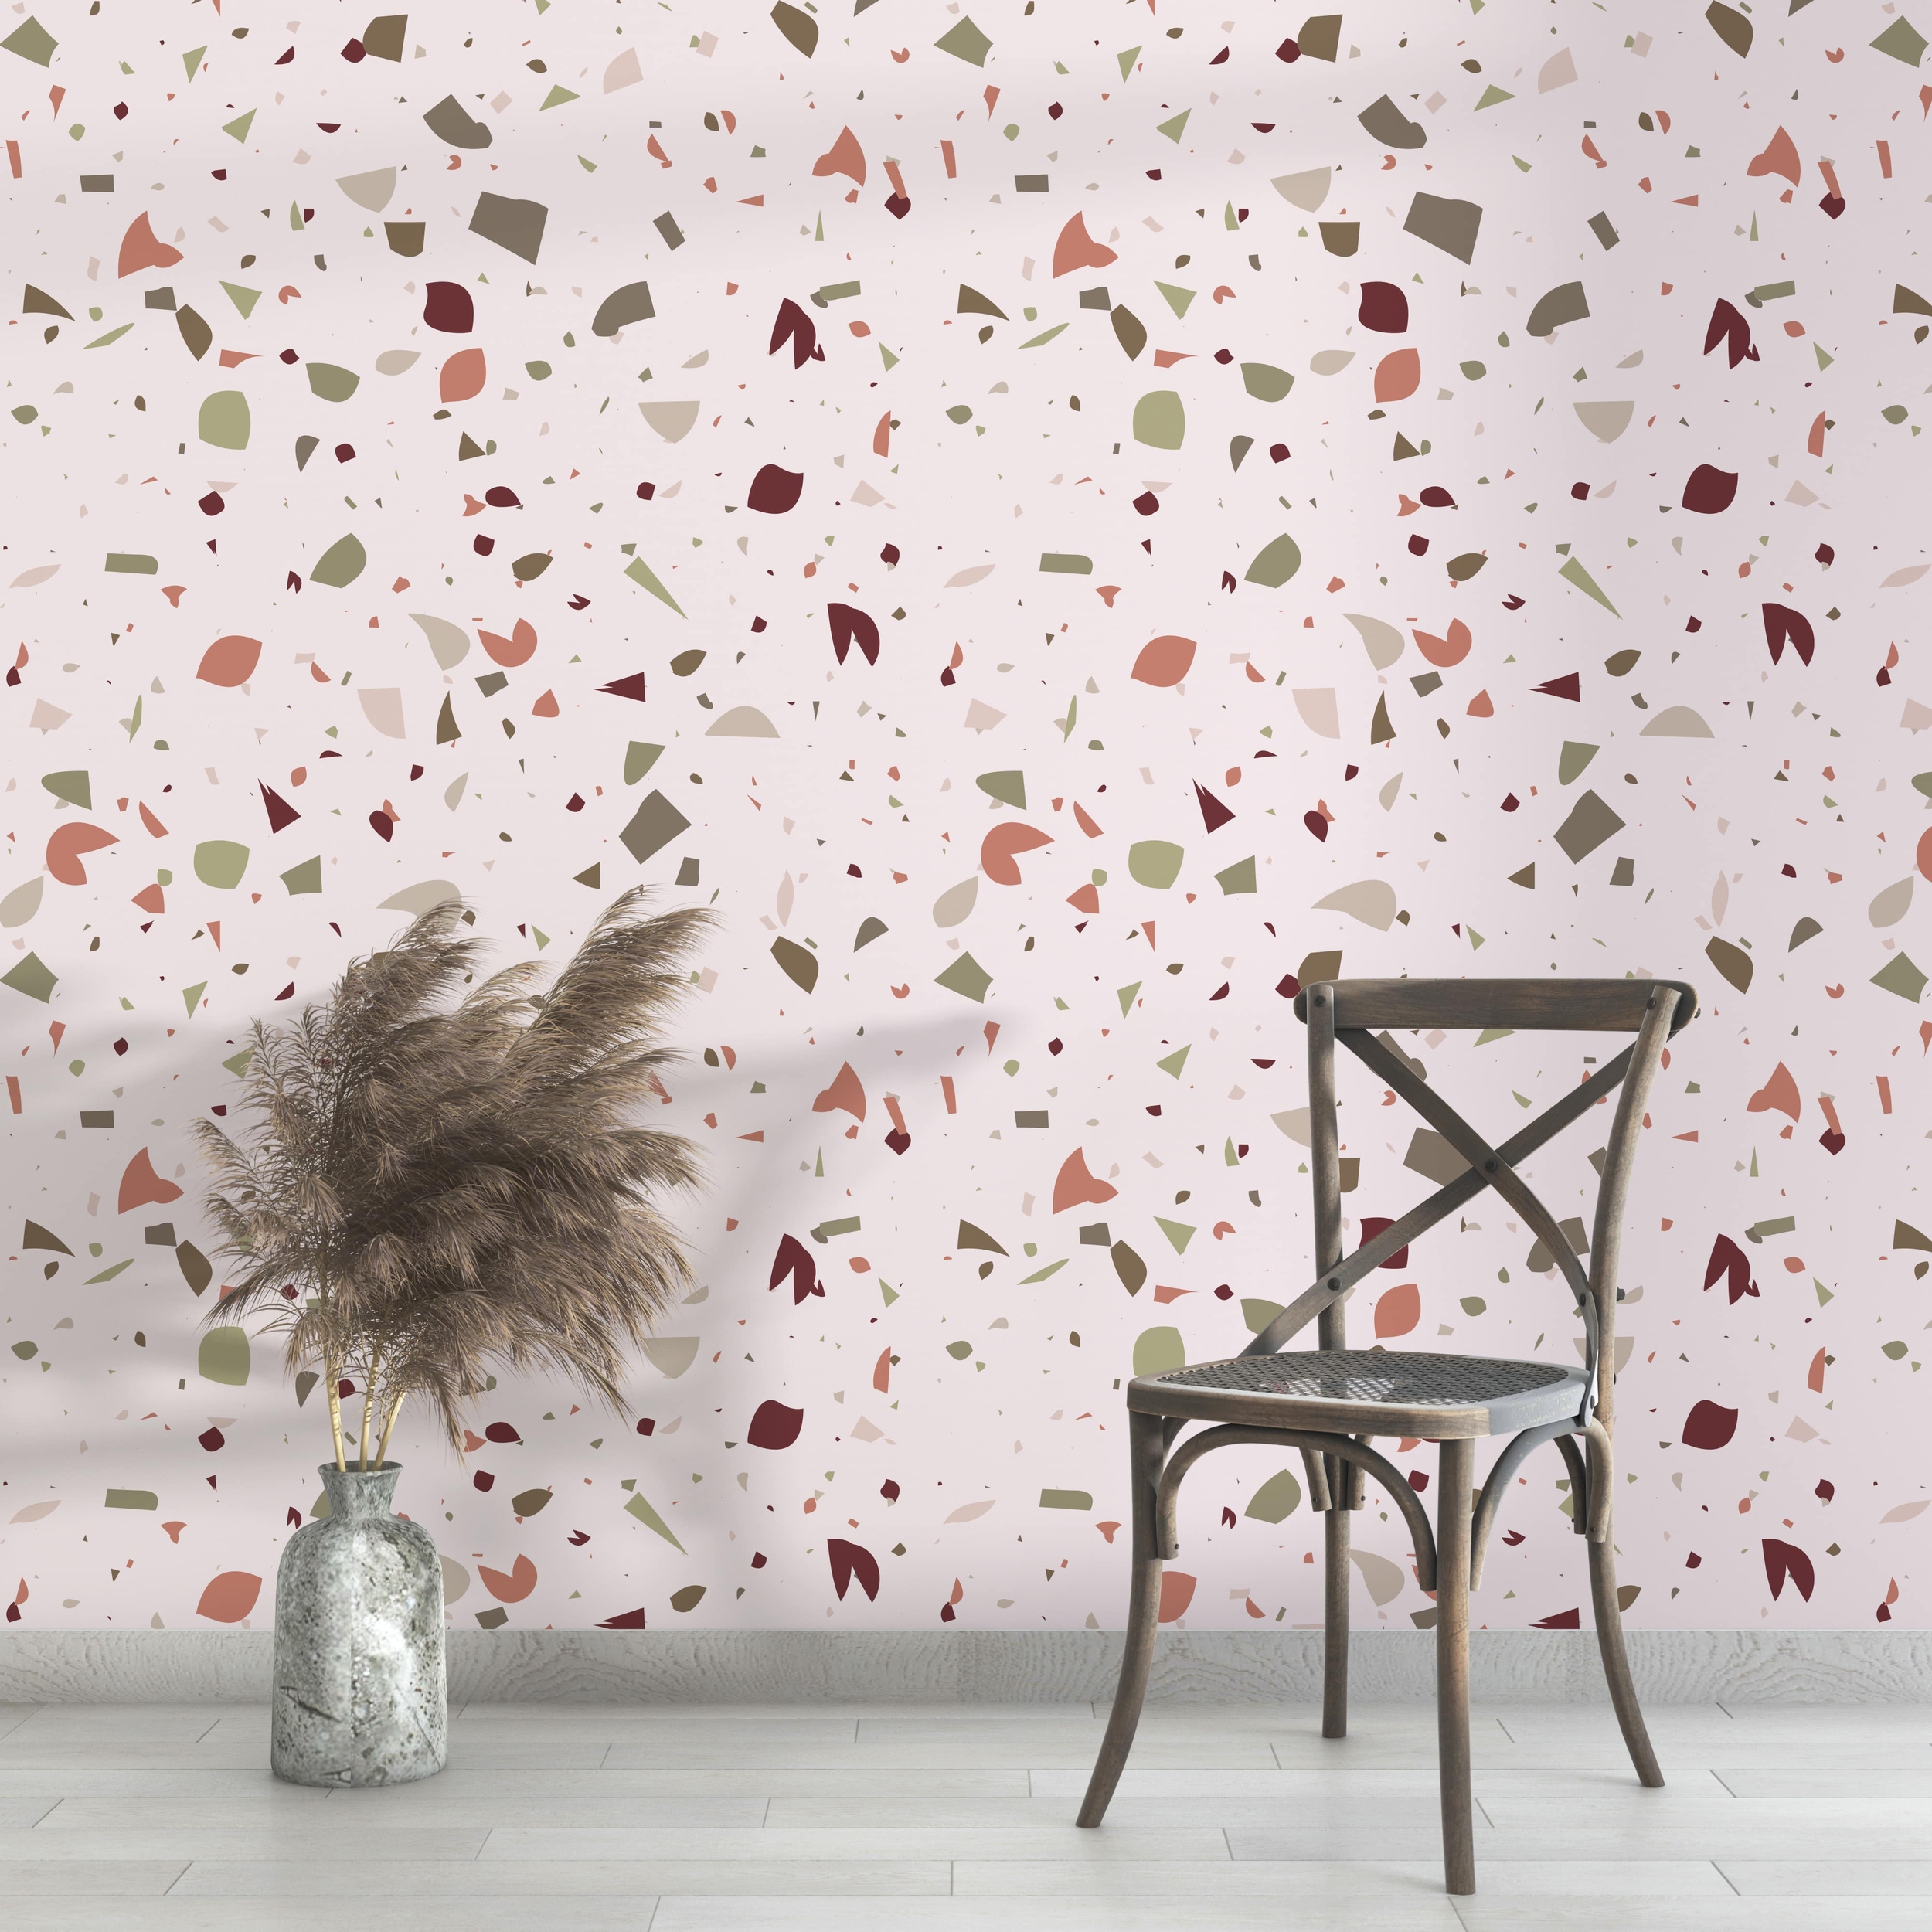 PP91-mur-papier-peint-adhesif-decoratif-revetement-vinyle-motifs-brisure-rose-kaki-renovation-meuble-mur-min